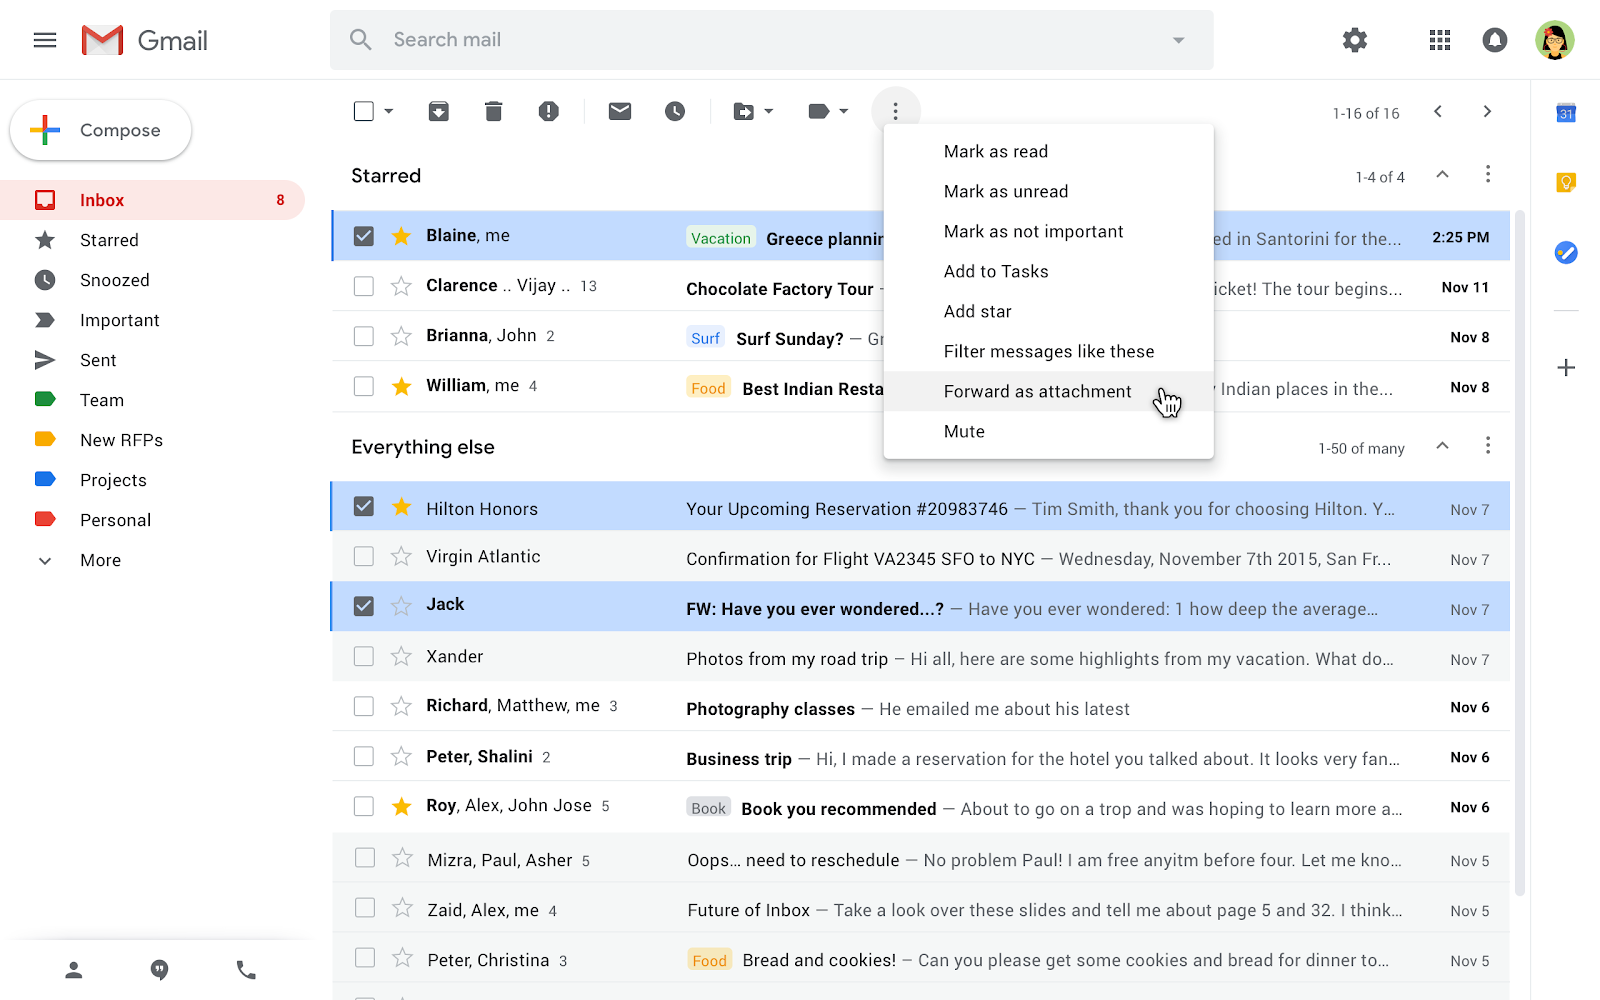 Gmail forward as attachment